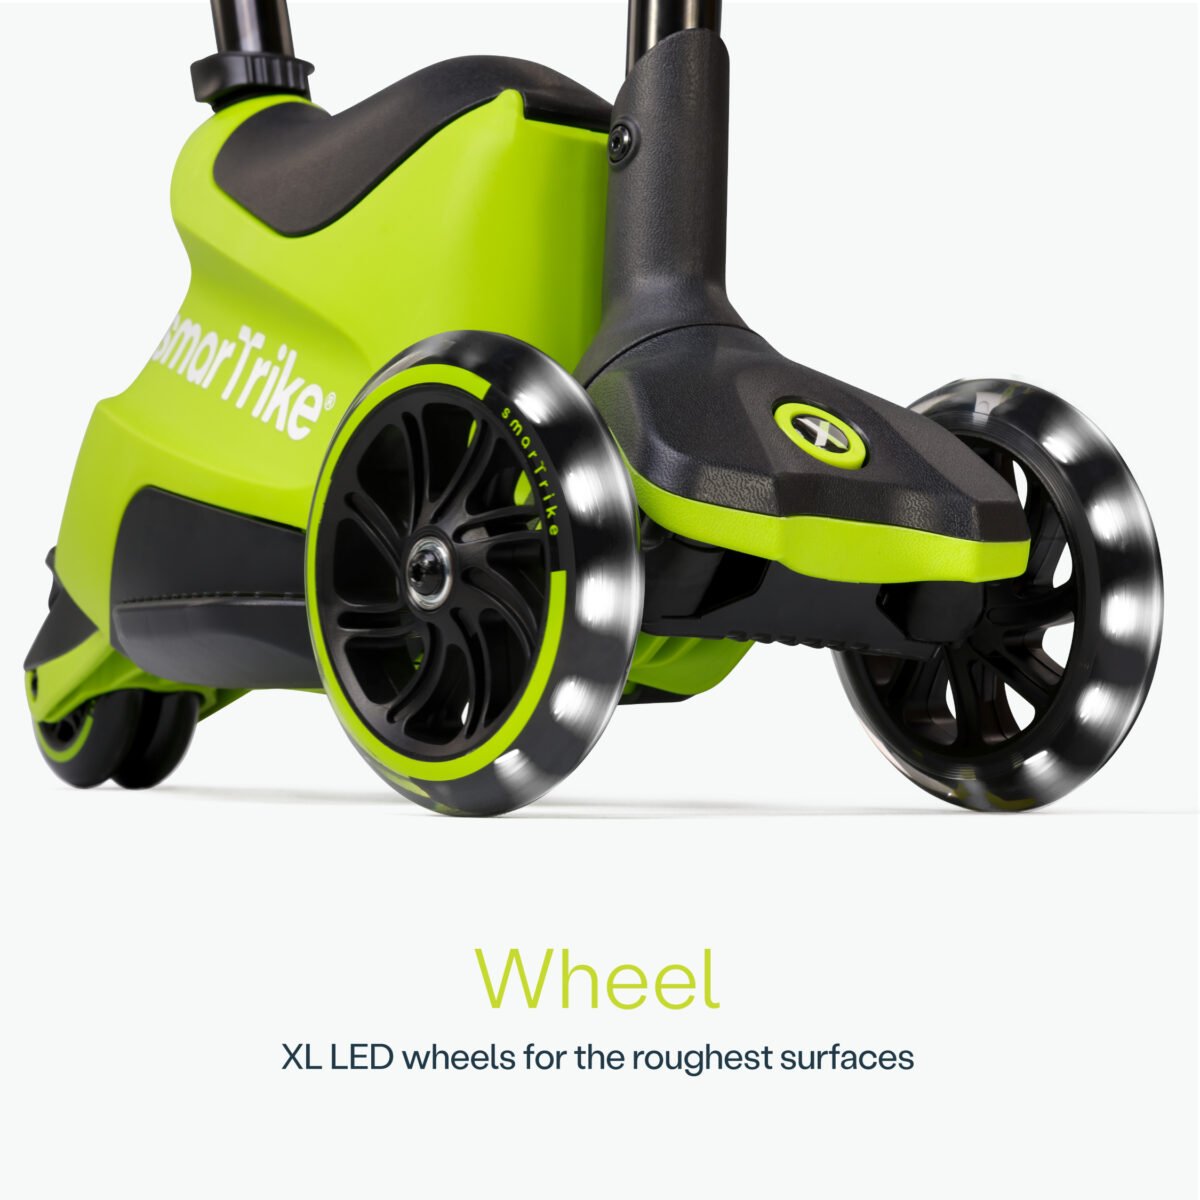 Smartrike - Hulajnoga 4W1- Xtend Ride-On - Lime